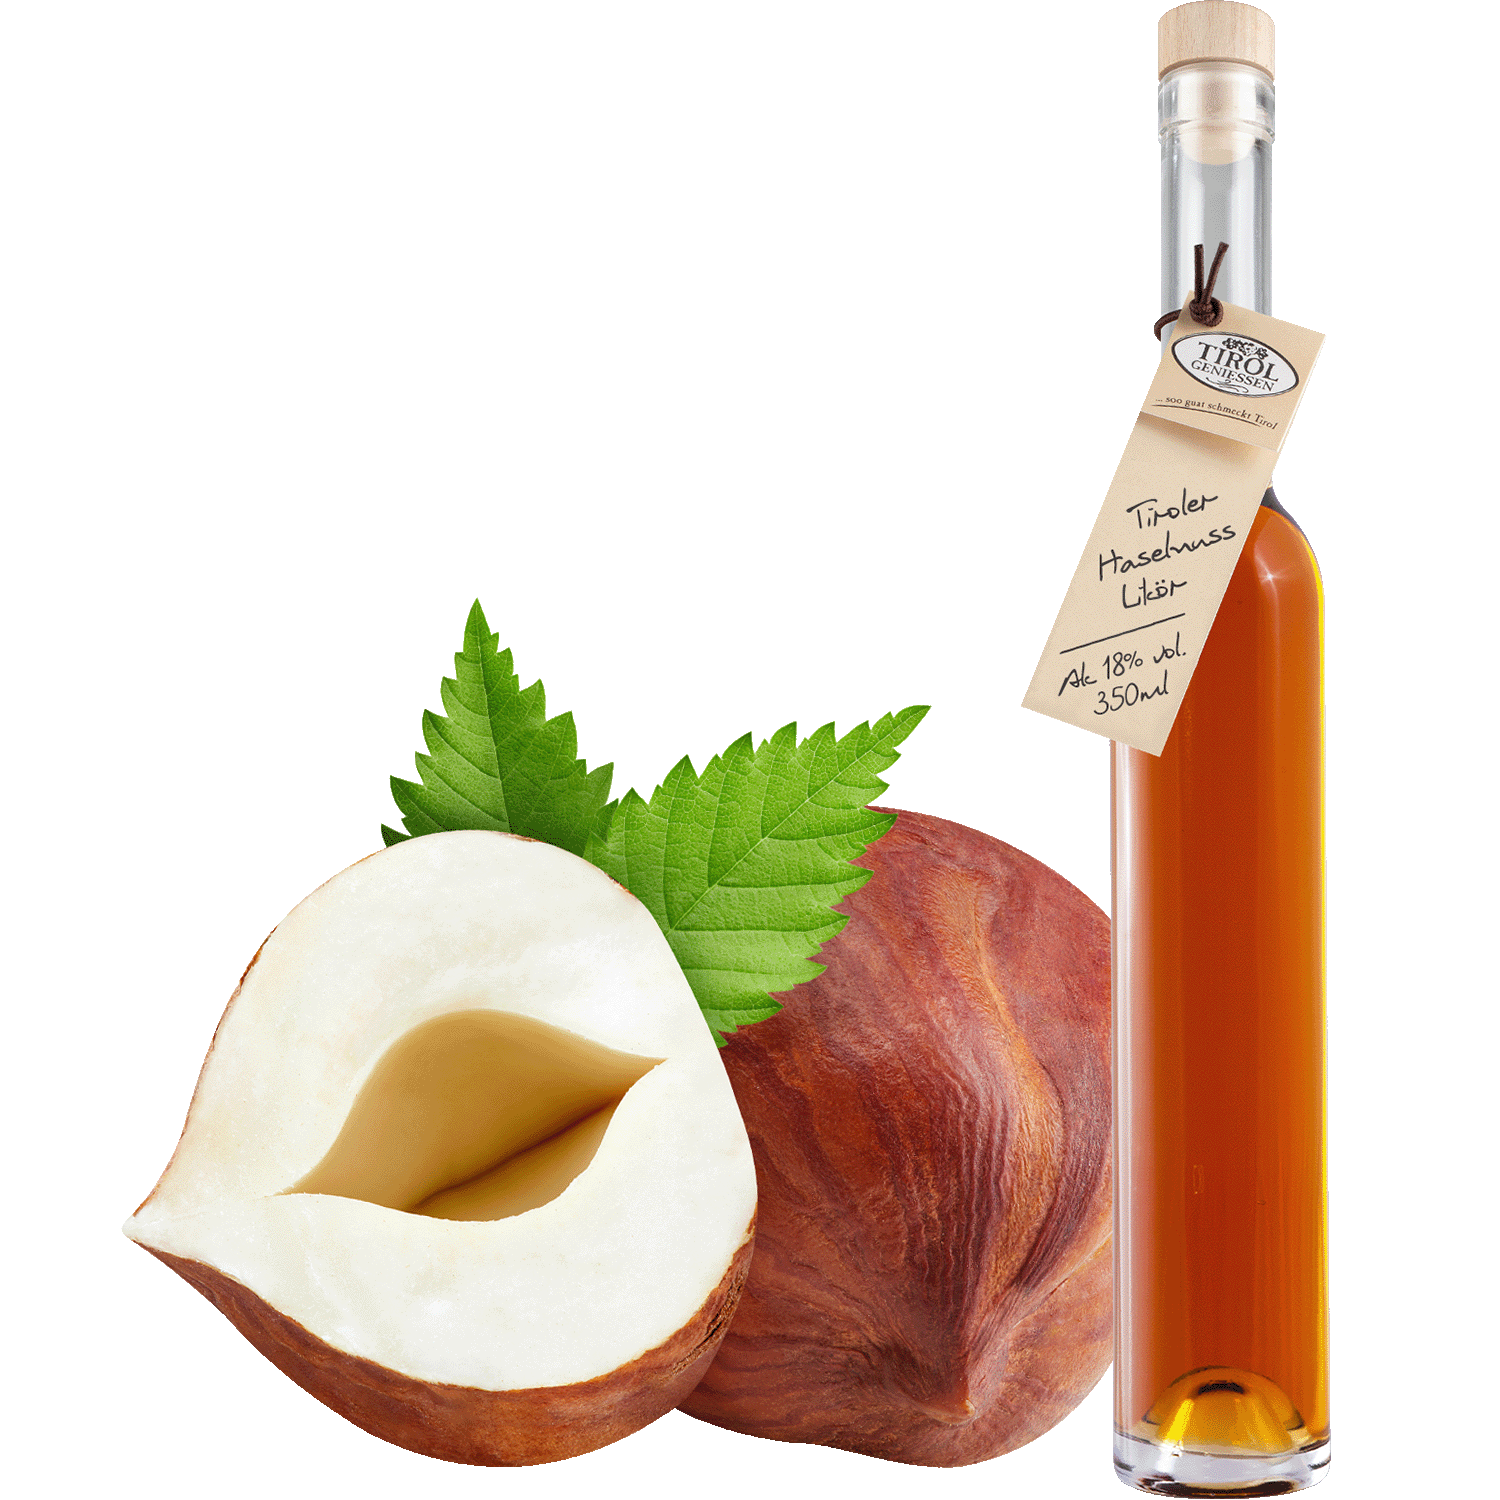 Hazelnut Liqueur in gift bottle from Austria from Tirol Geniessen